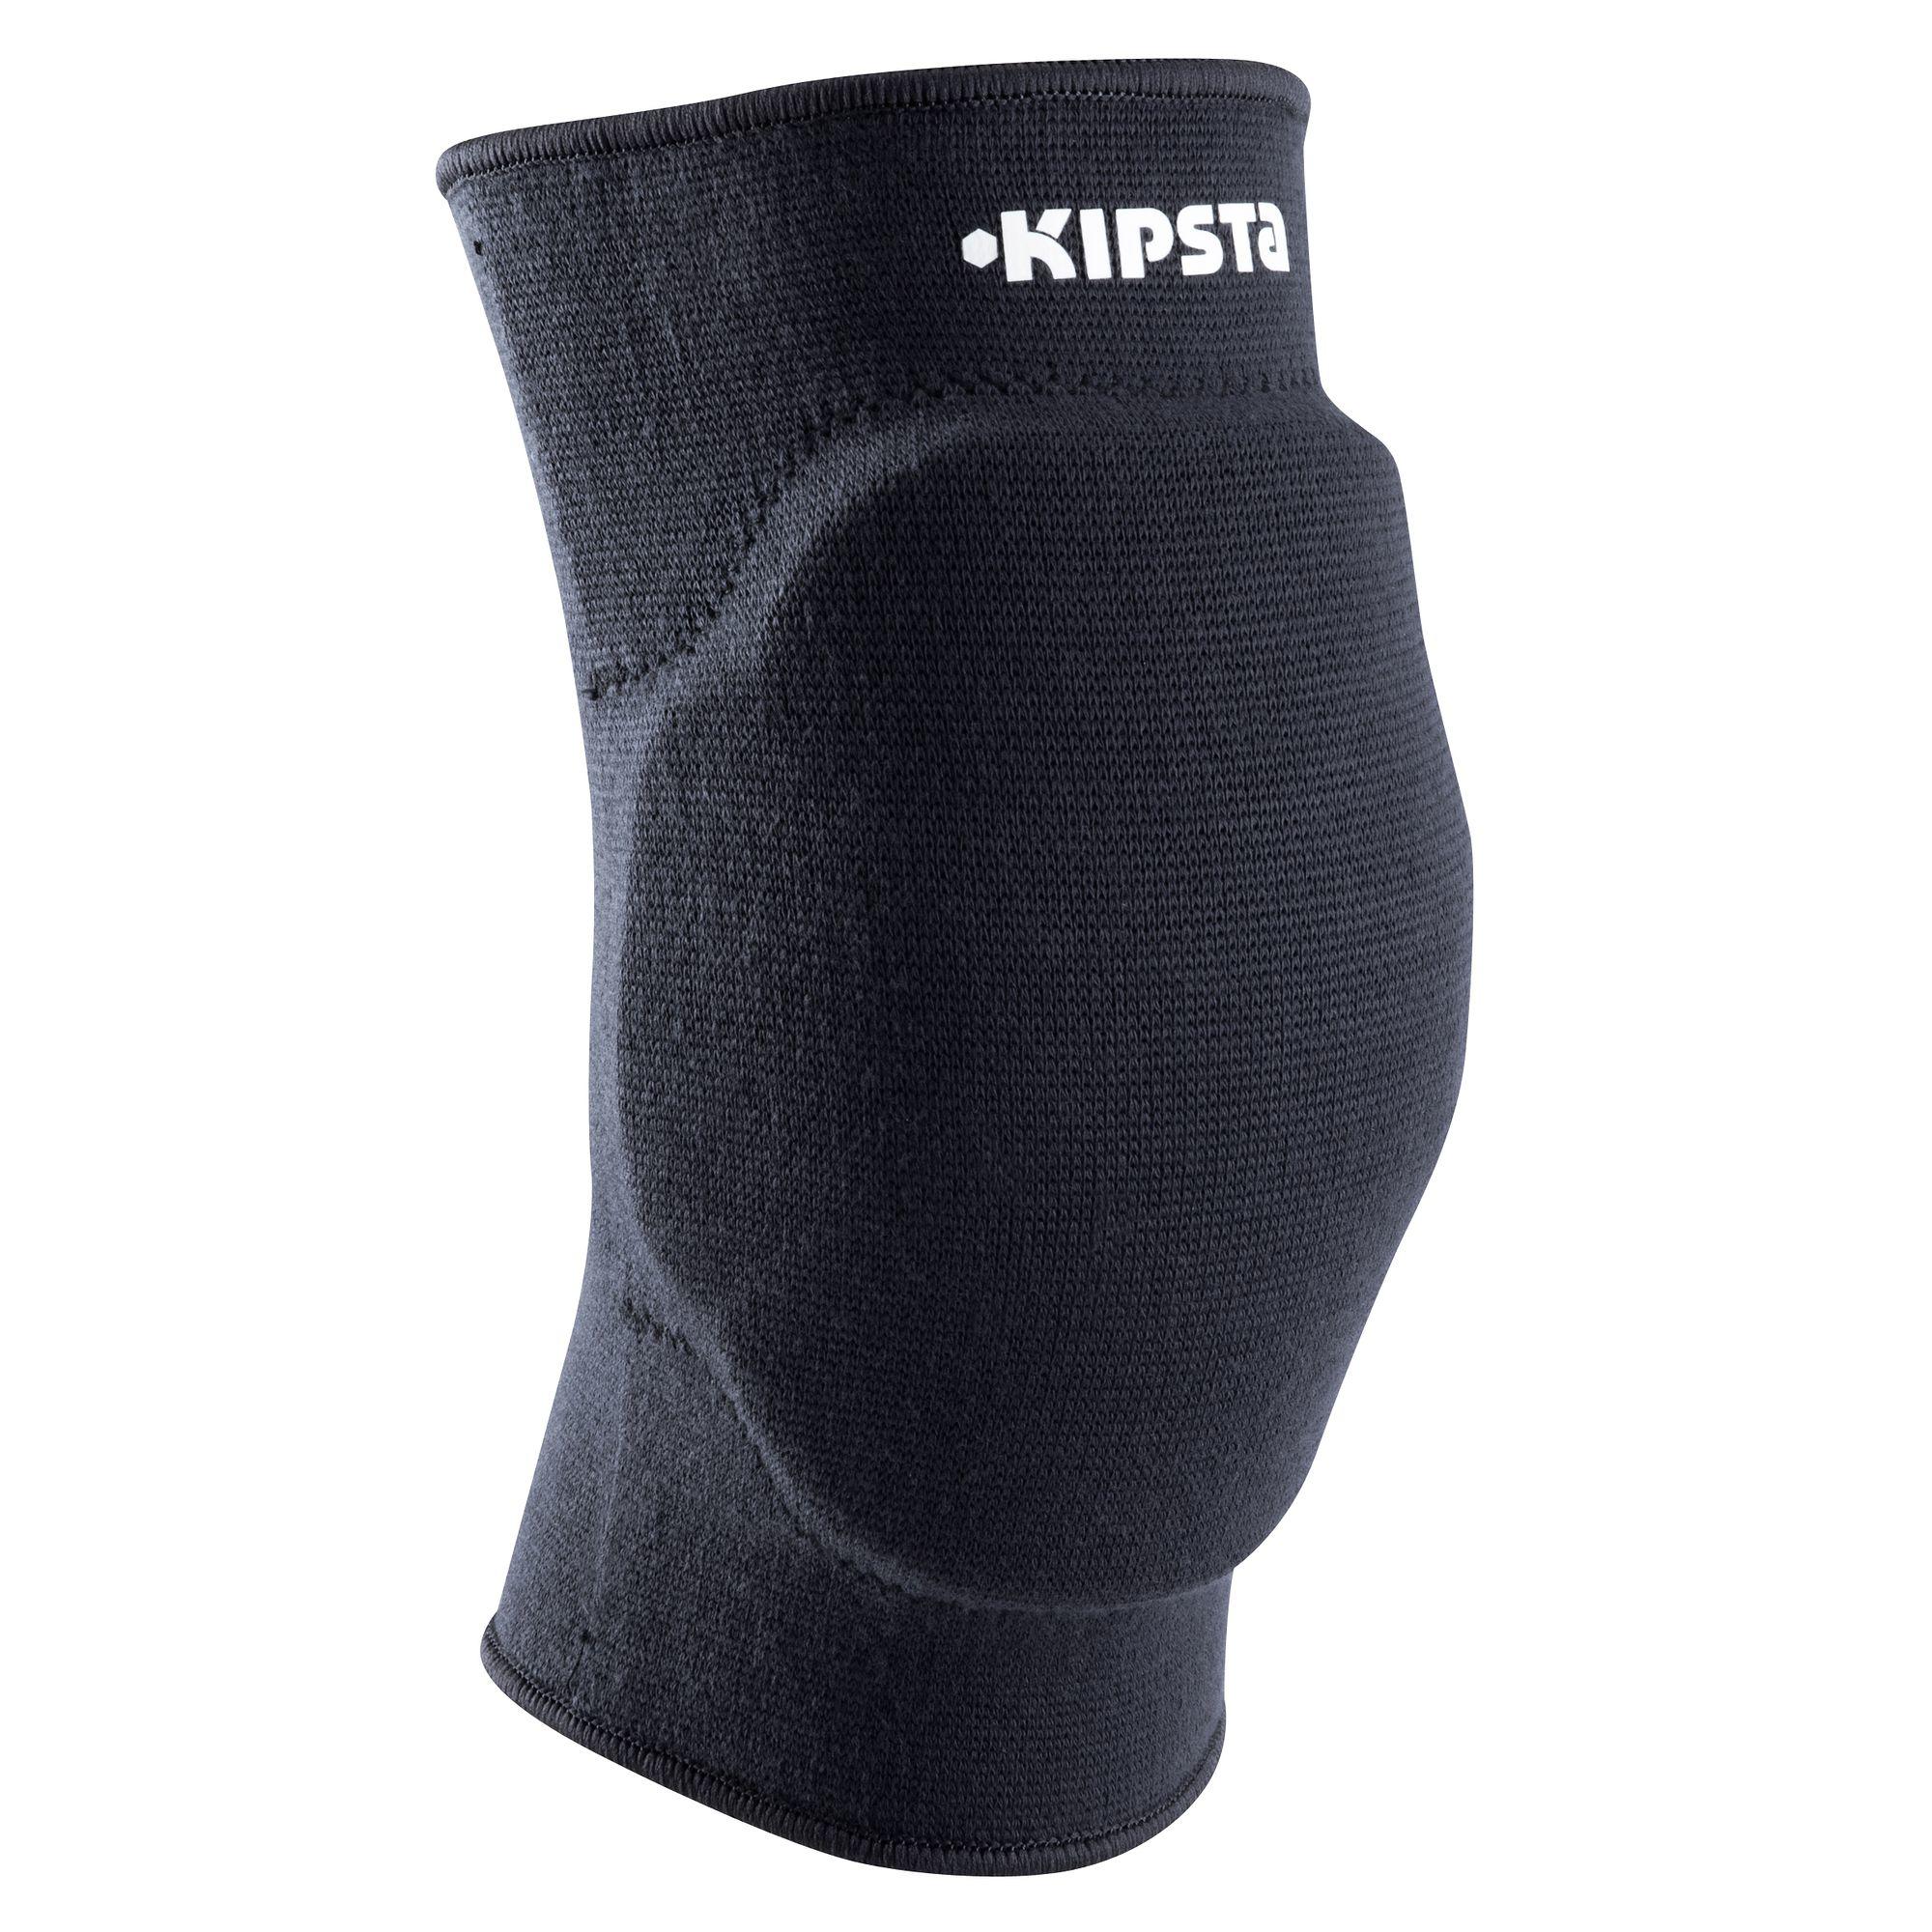 kipsta volleyball knee pads